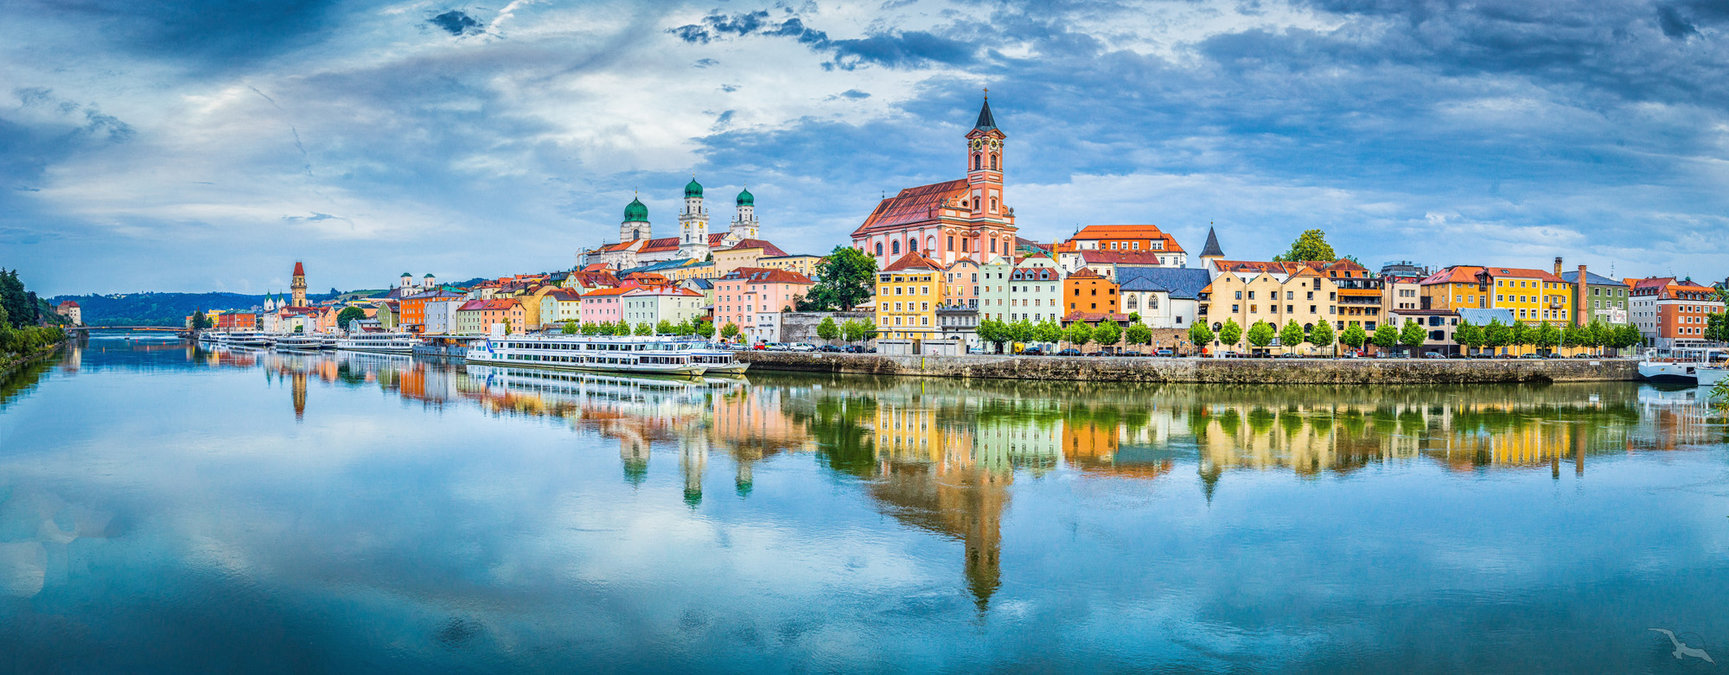 Donaugenuss: Passau - Wien - Esztergom - Budapest - Bratislava - Dürnstein - Passau mit der MS Amina